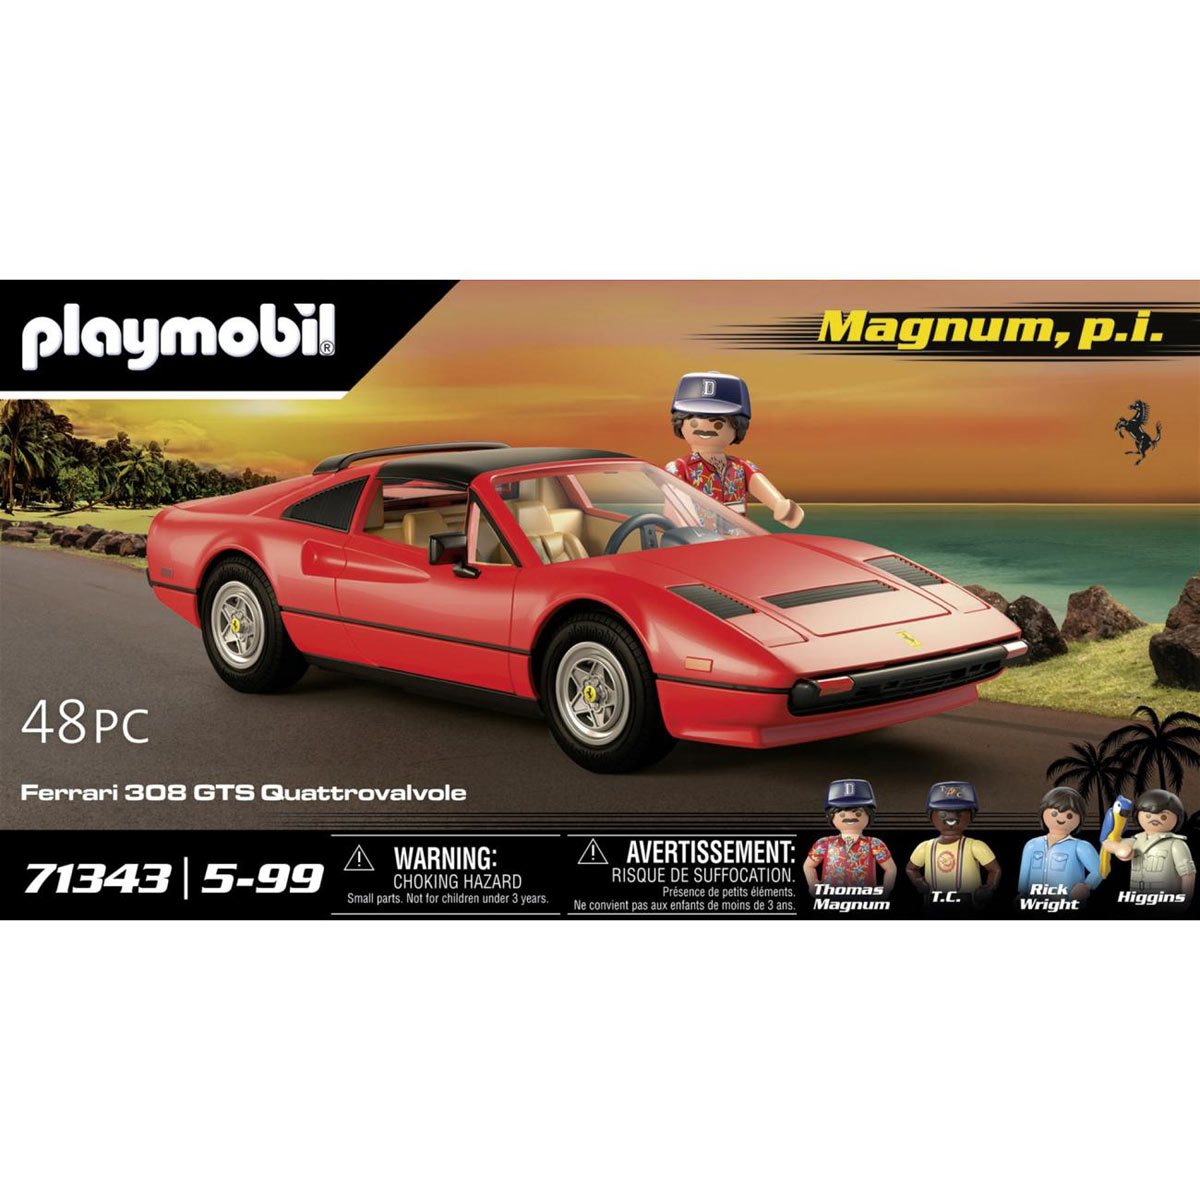 New: The iconic Magnum, p.i. Ferrari 308 GTS Quattrovalvole - PLAYMOBIL US